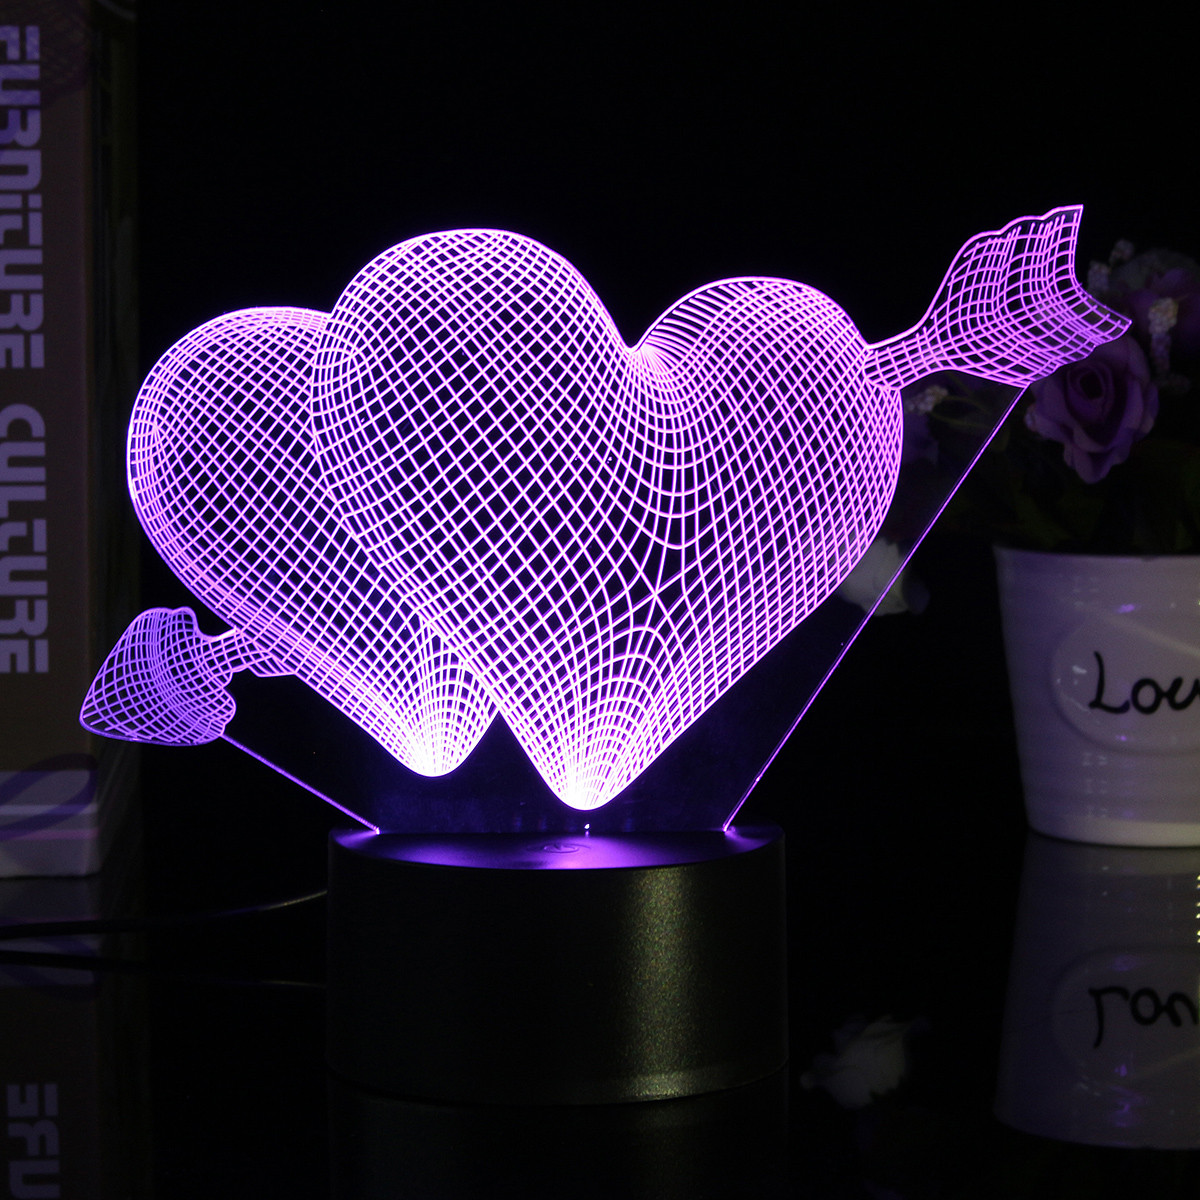 Love-Arrow-3D-Desk-Table-Lamp-7-Color-Change-LED-Night-Light-Party-Decor-Gift-1106455-5